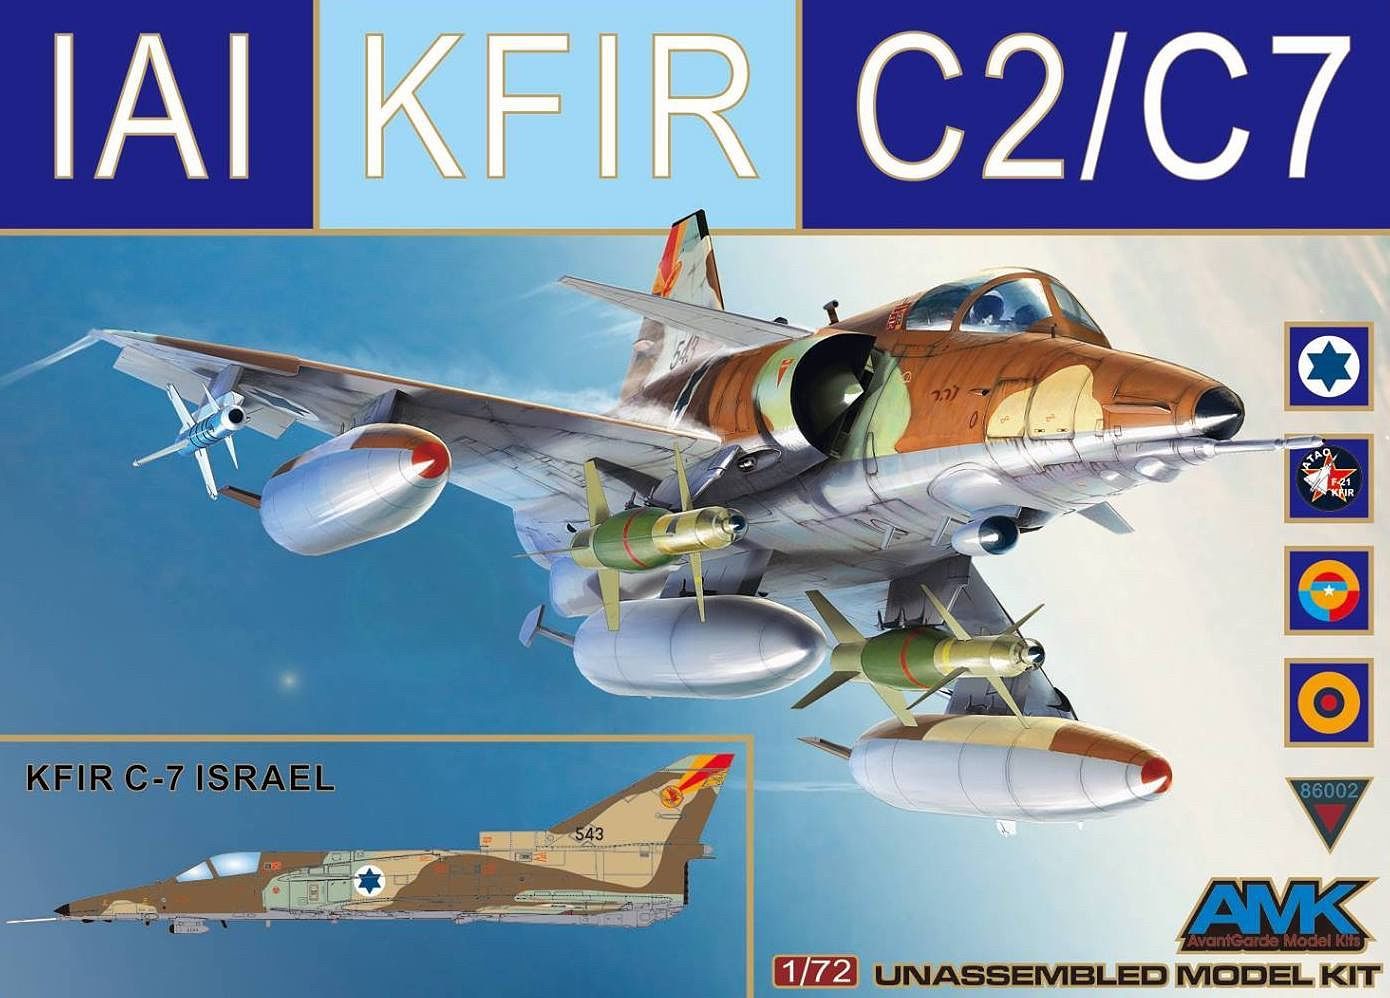 1/72 IAI KFIR C2/C7 - AMK